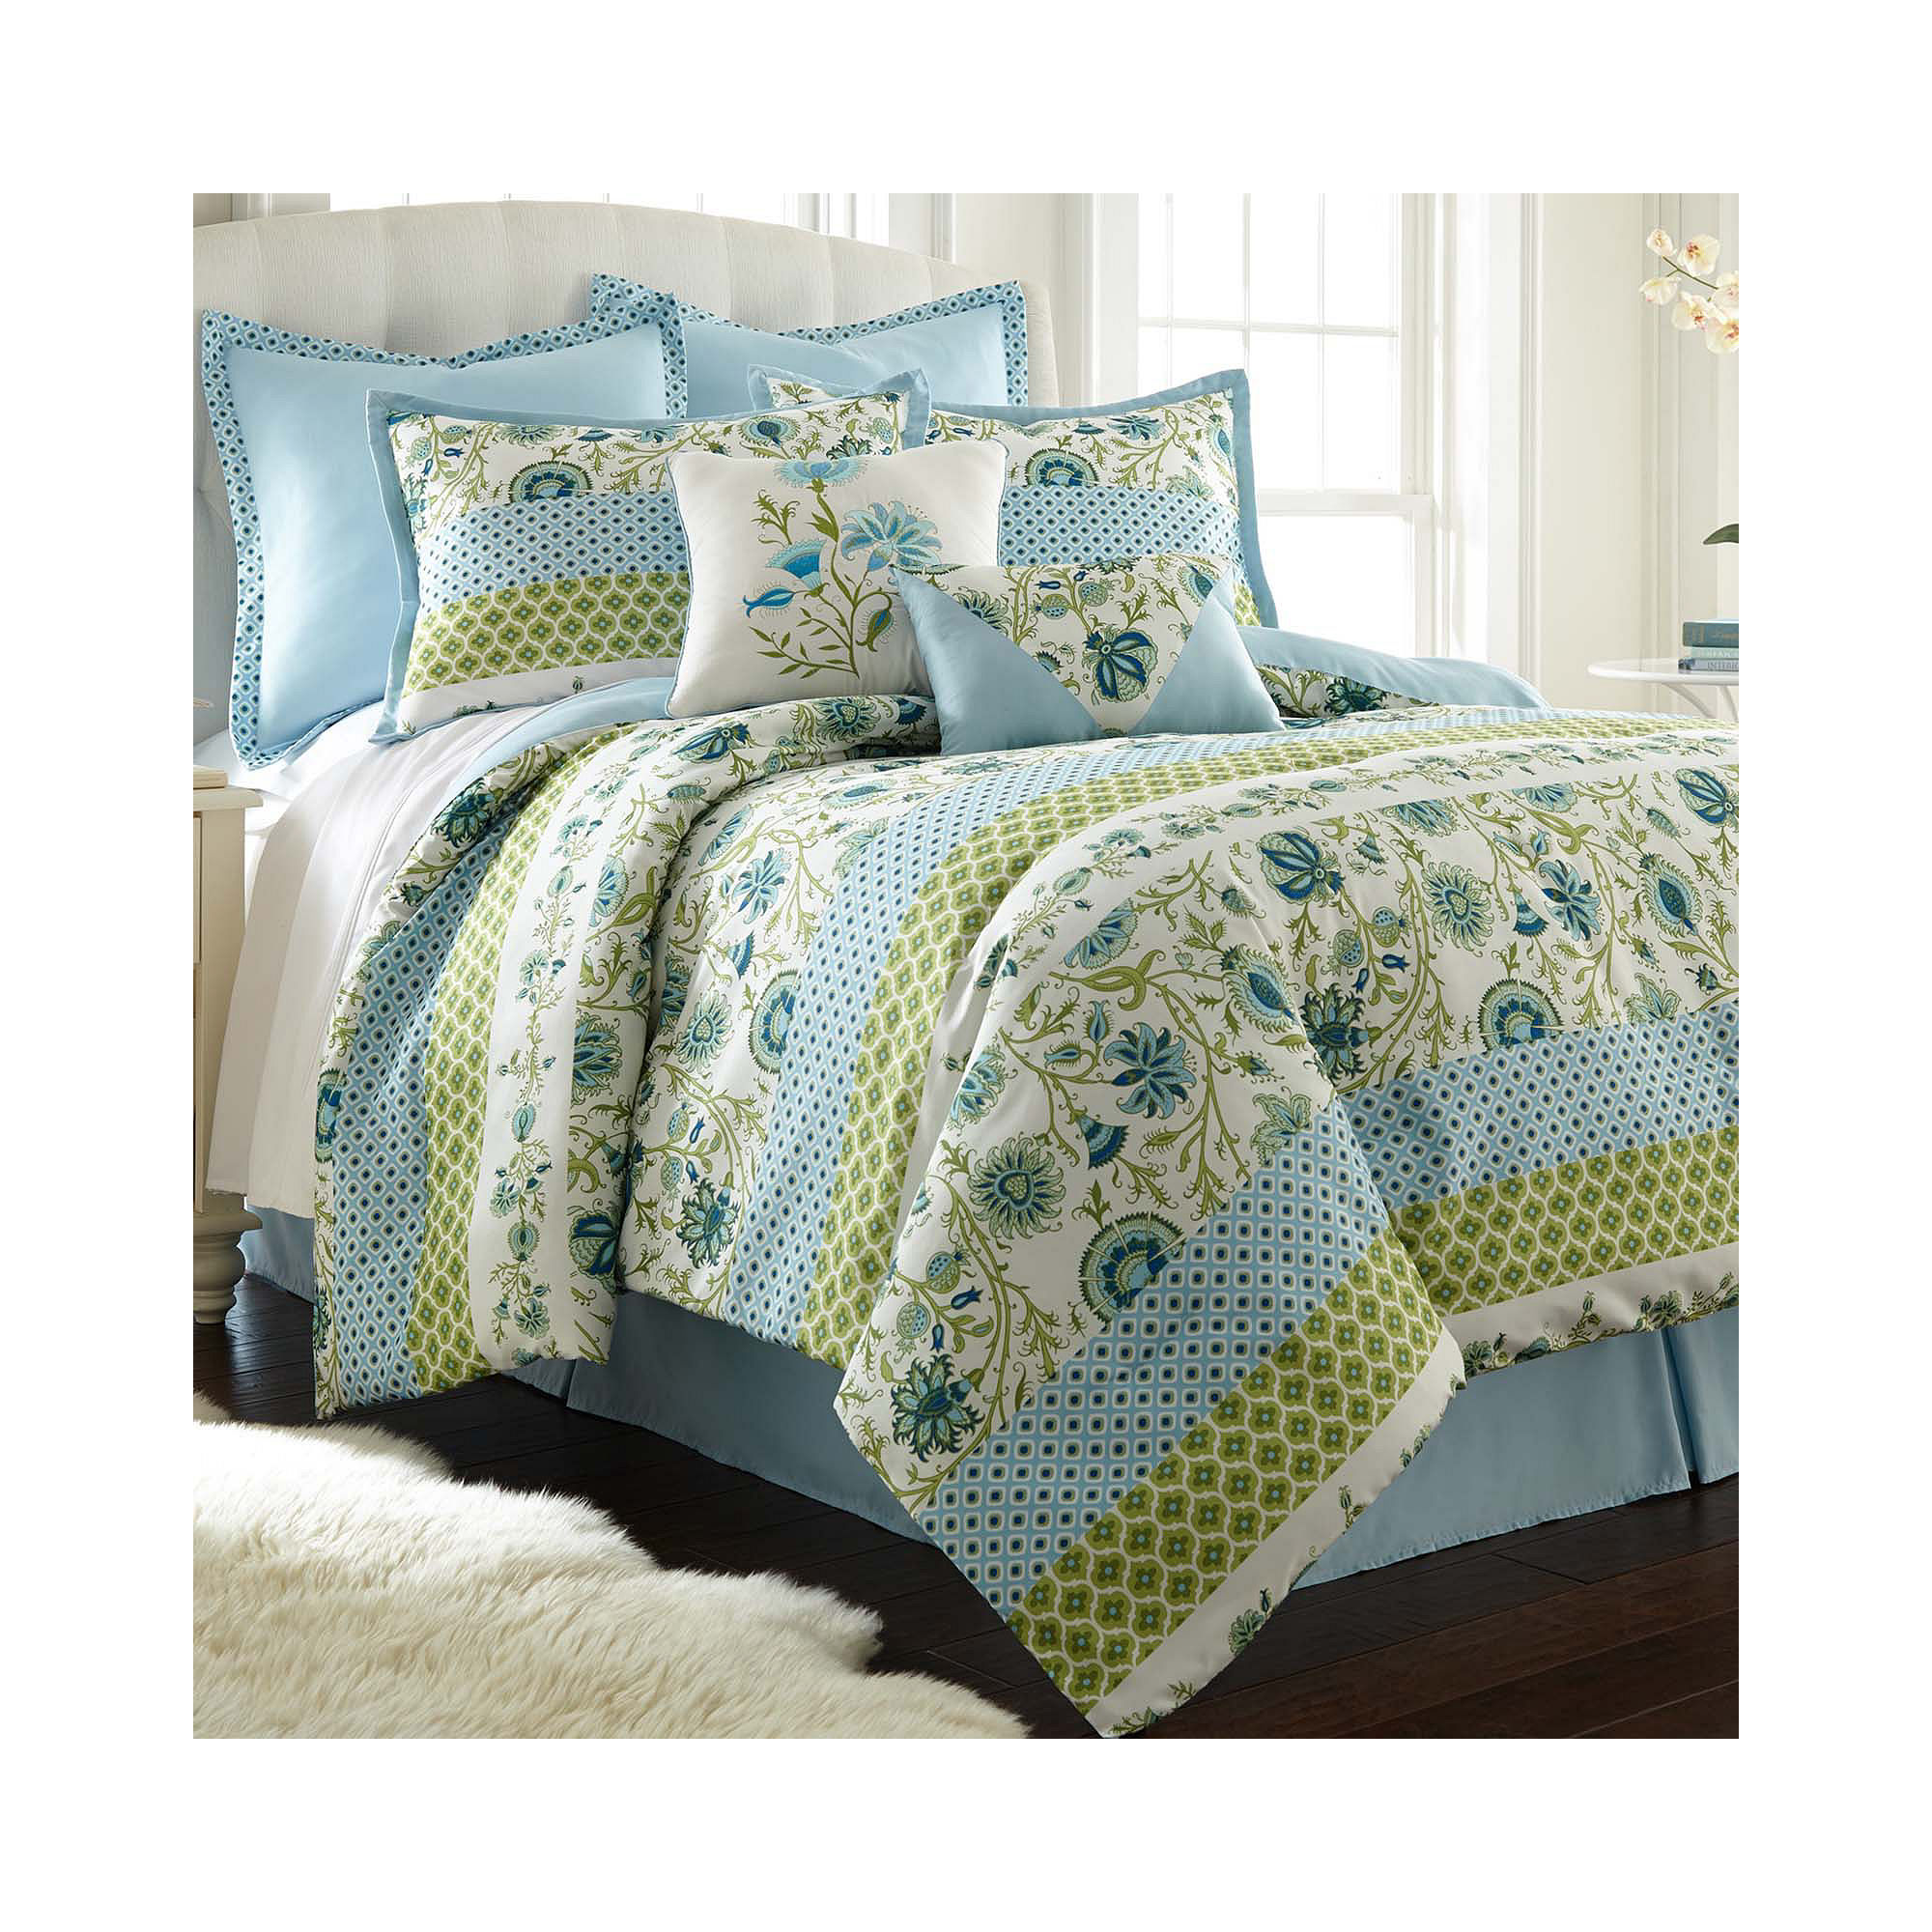 Pacific Coast Textiles Kiana 8-pc. Comforter Set